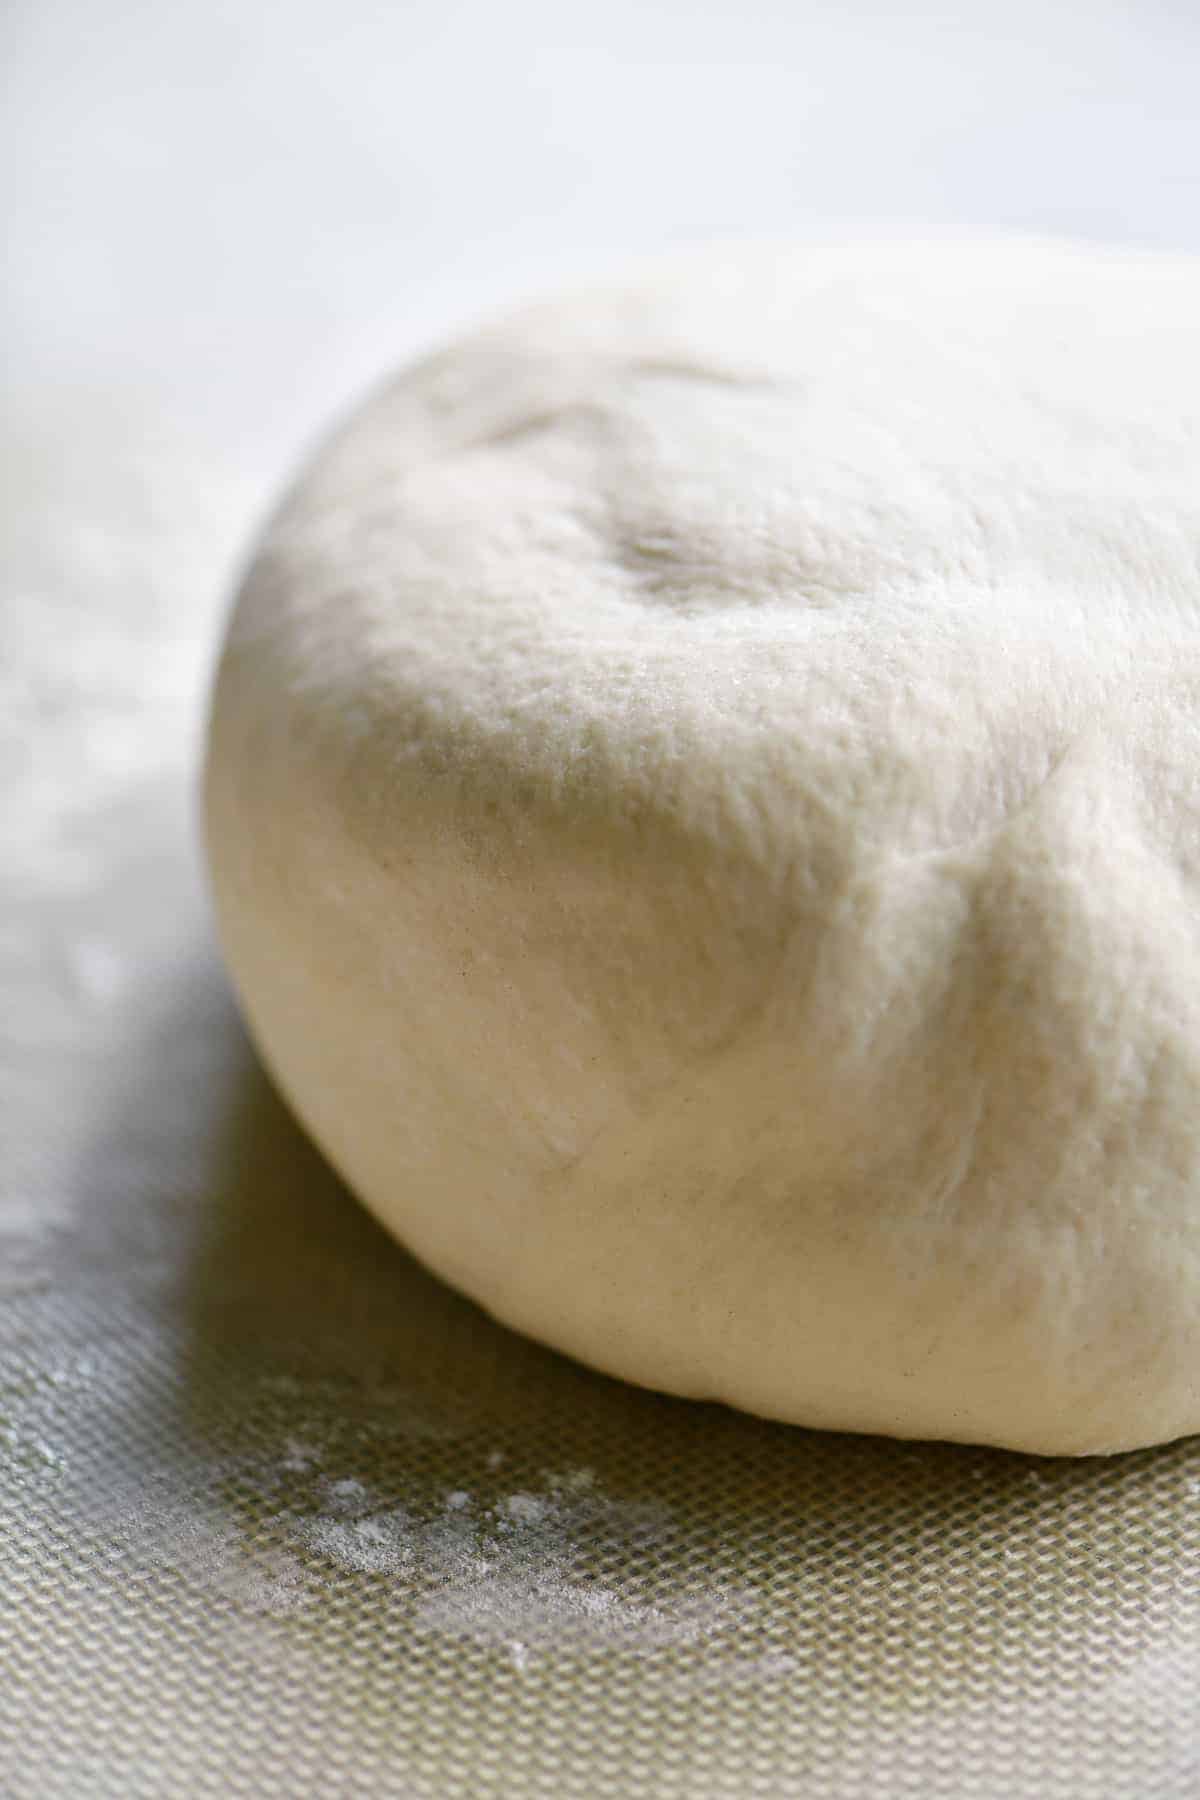 A ball of pizza dough